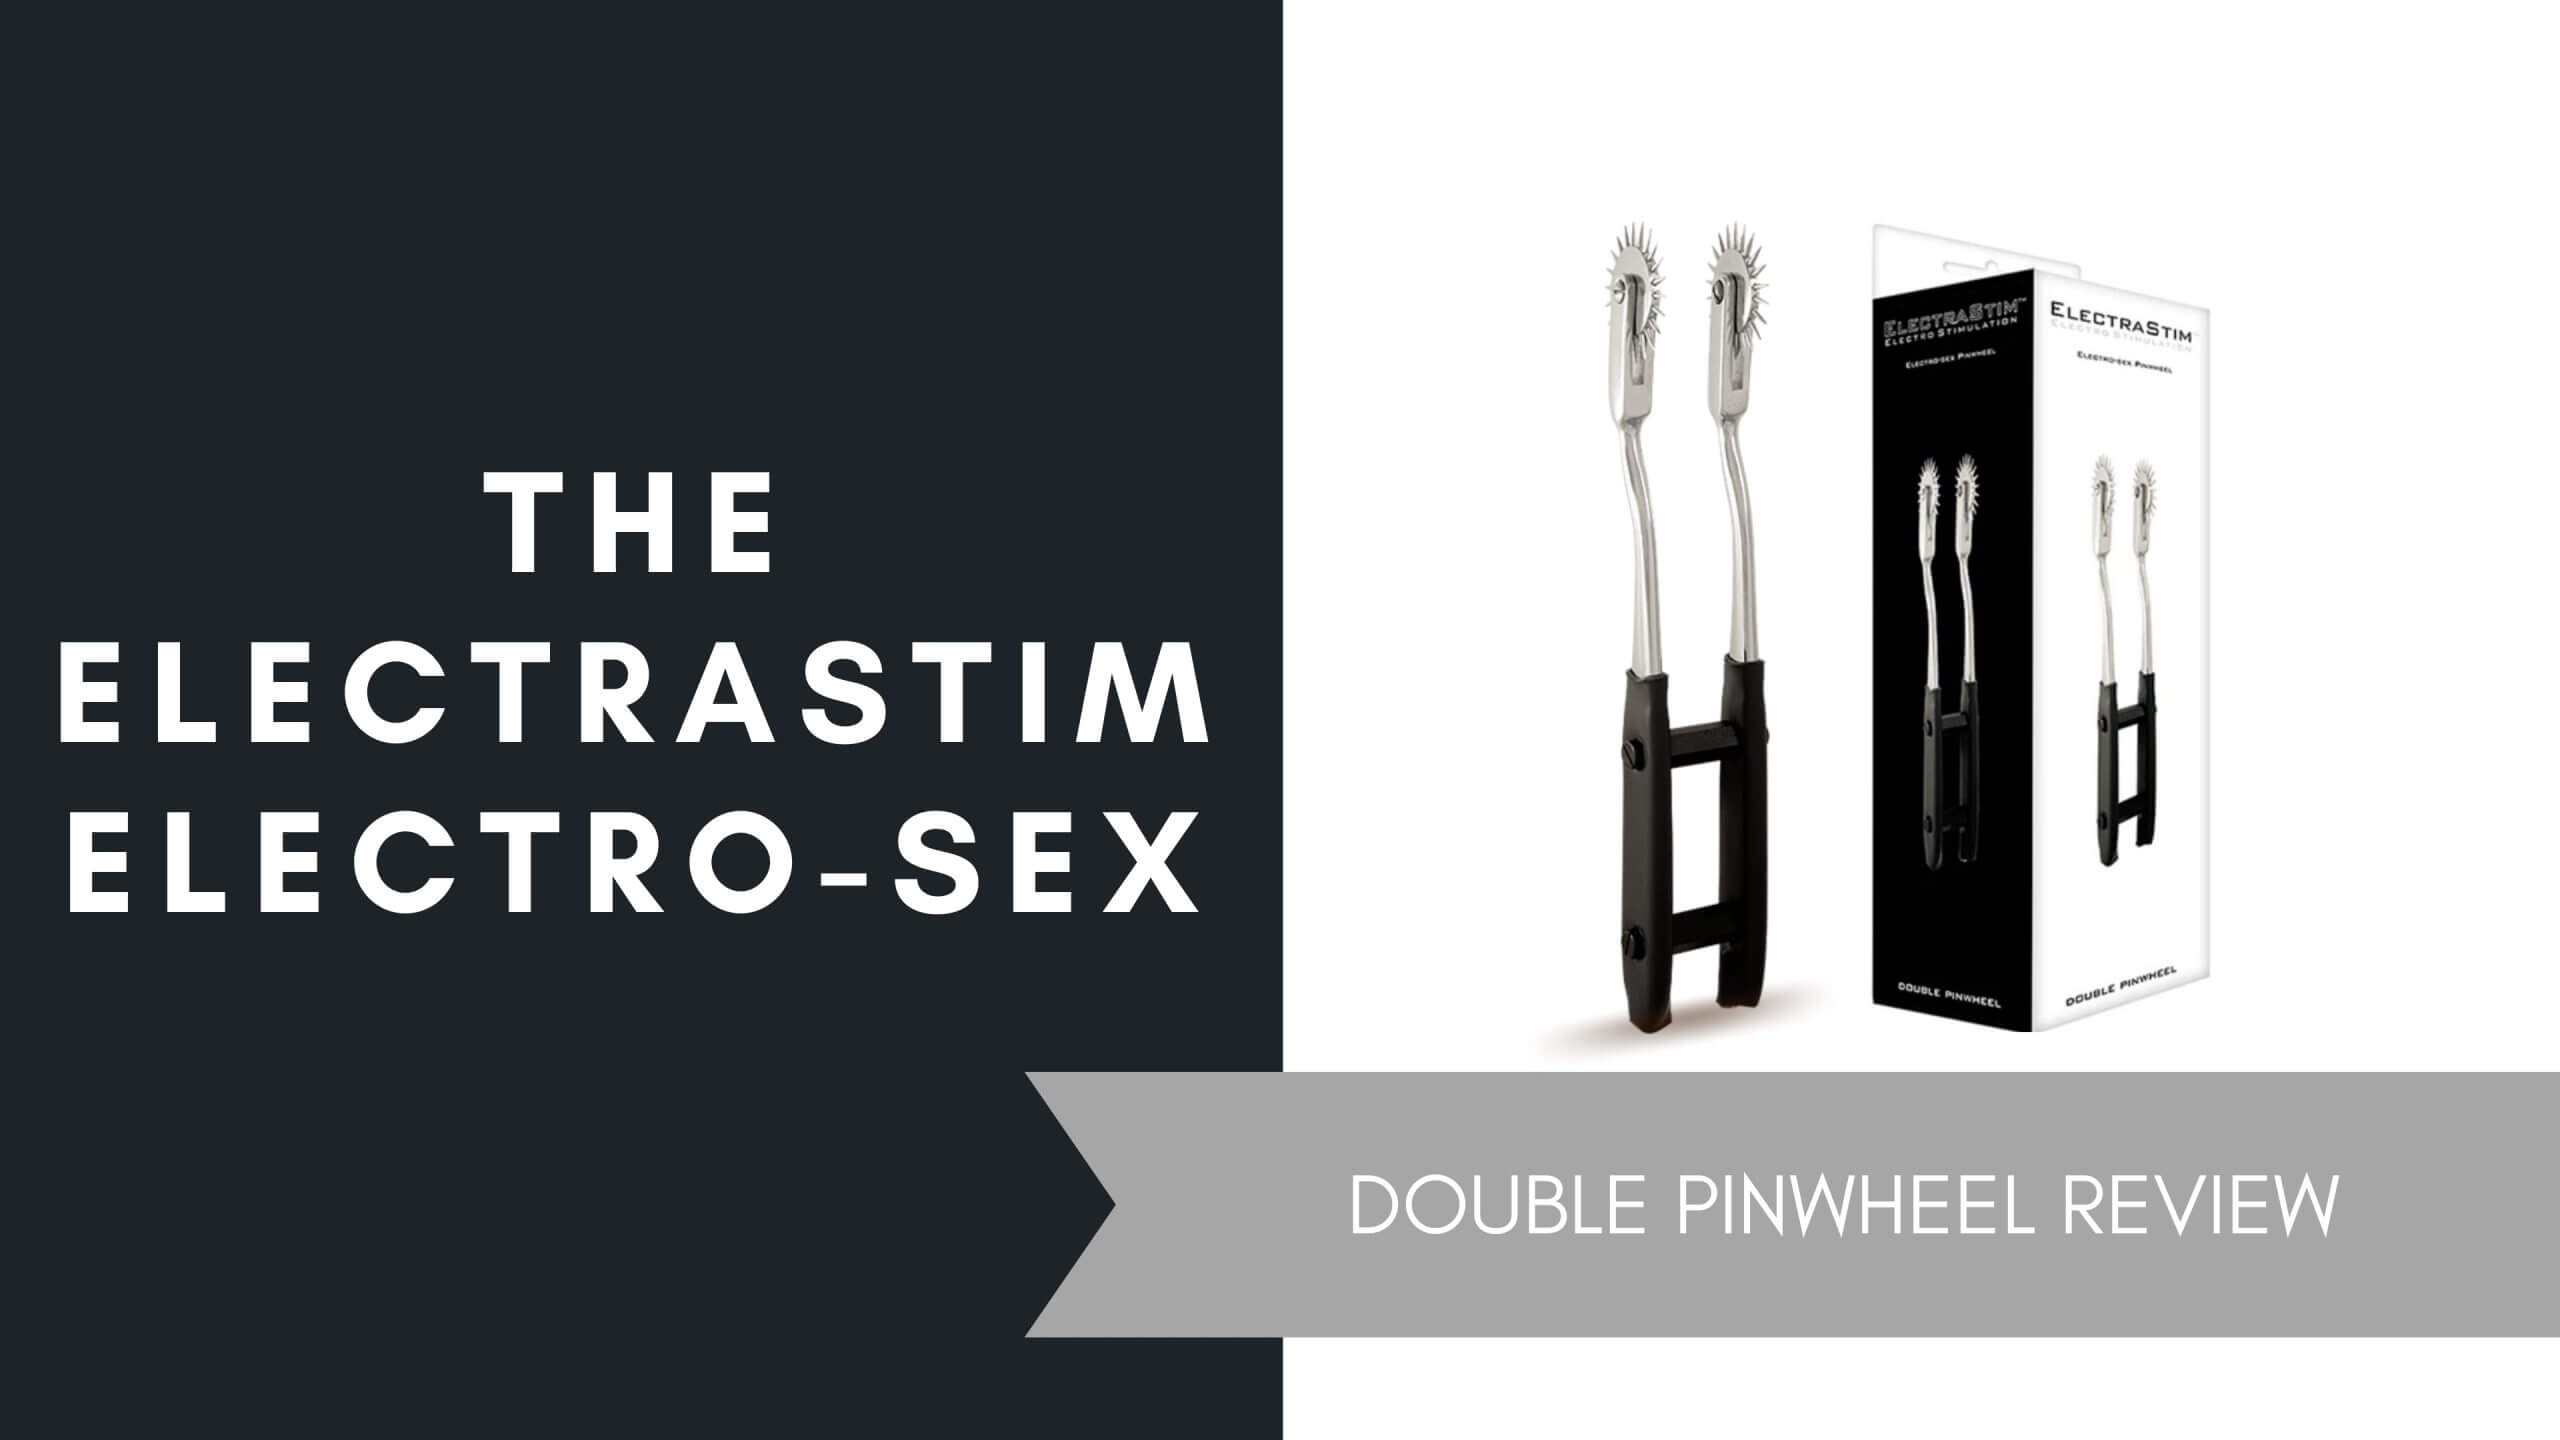 The ElectraStim Electro-Sex Double Pinwheel Review, June 2021